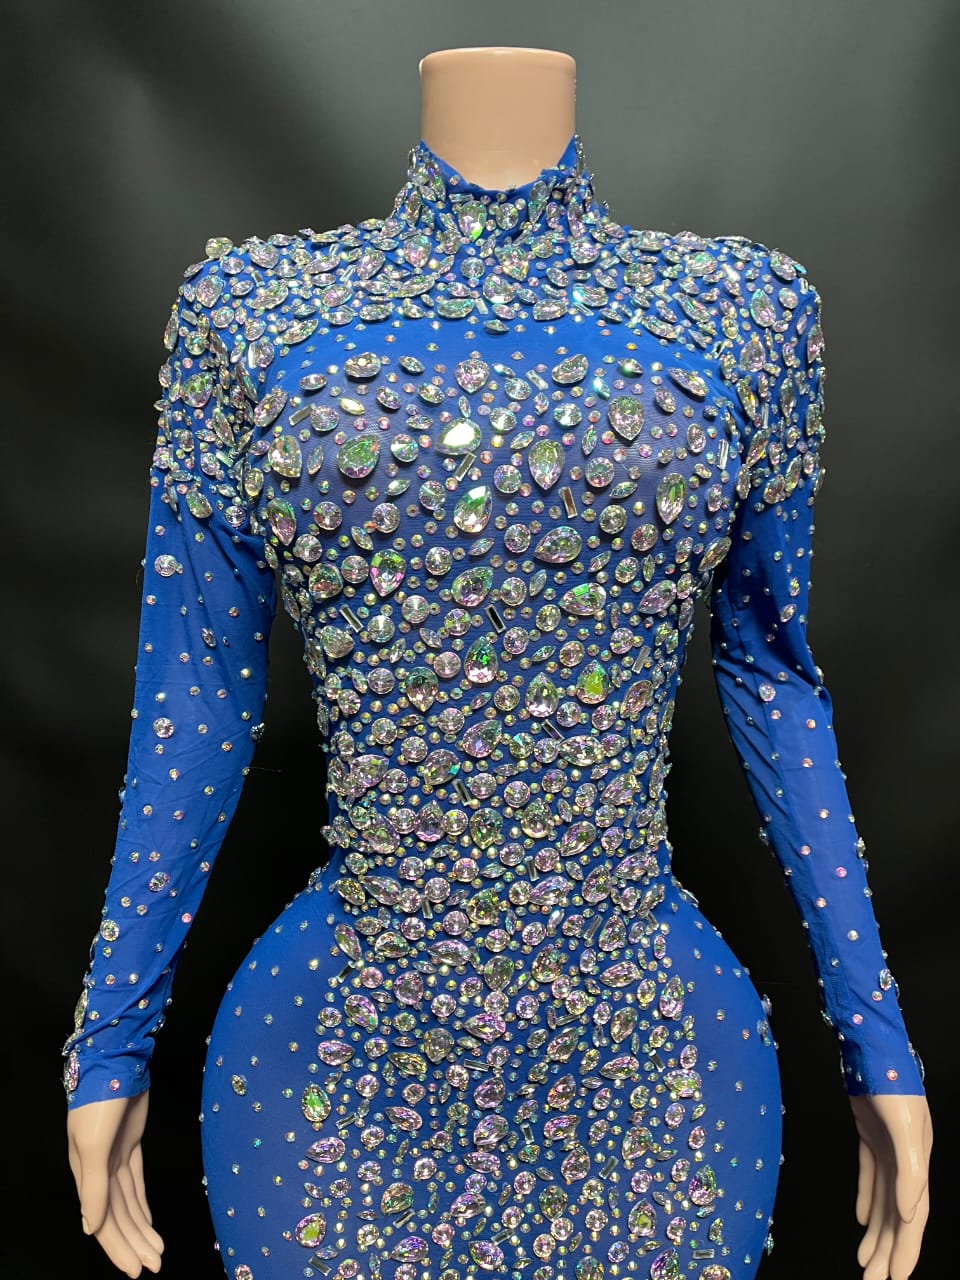 Ms HollyWood Blue Iridescent Diamond Stone Glam Dress